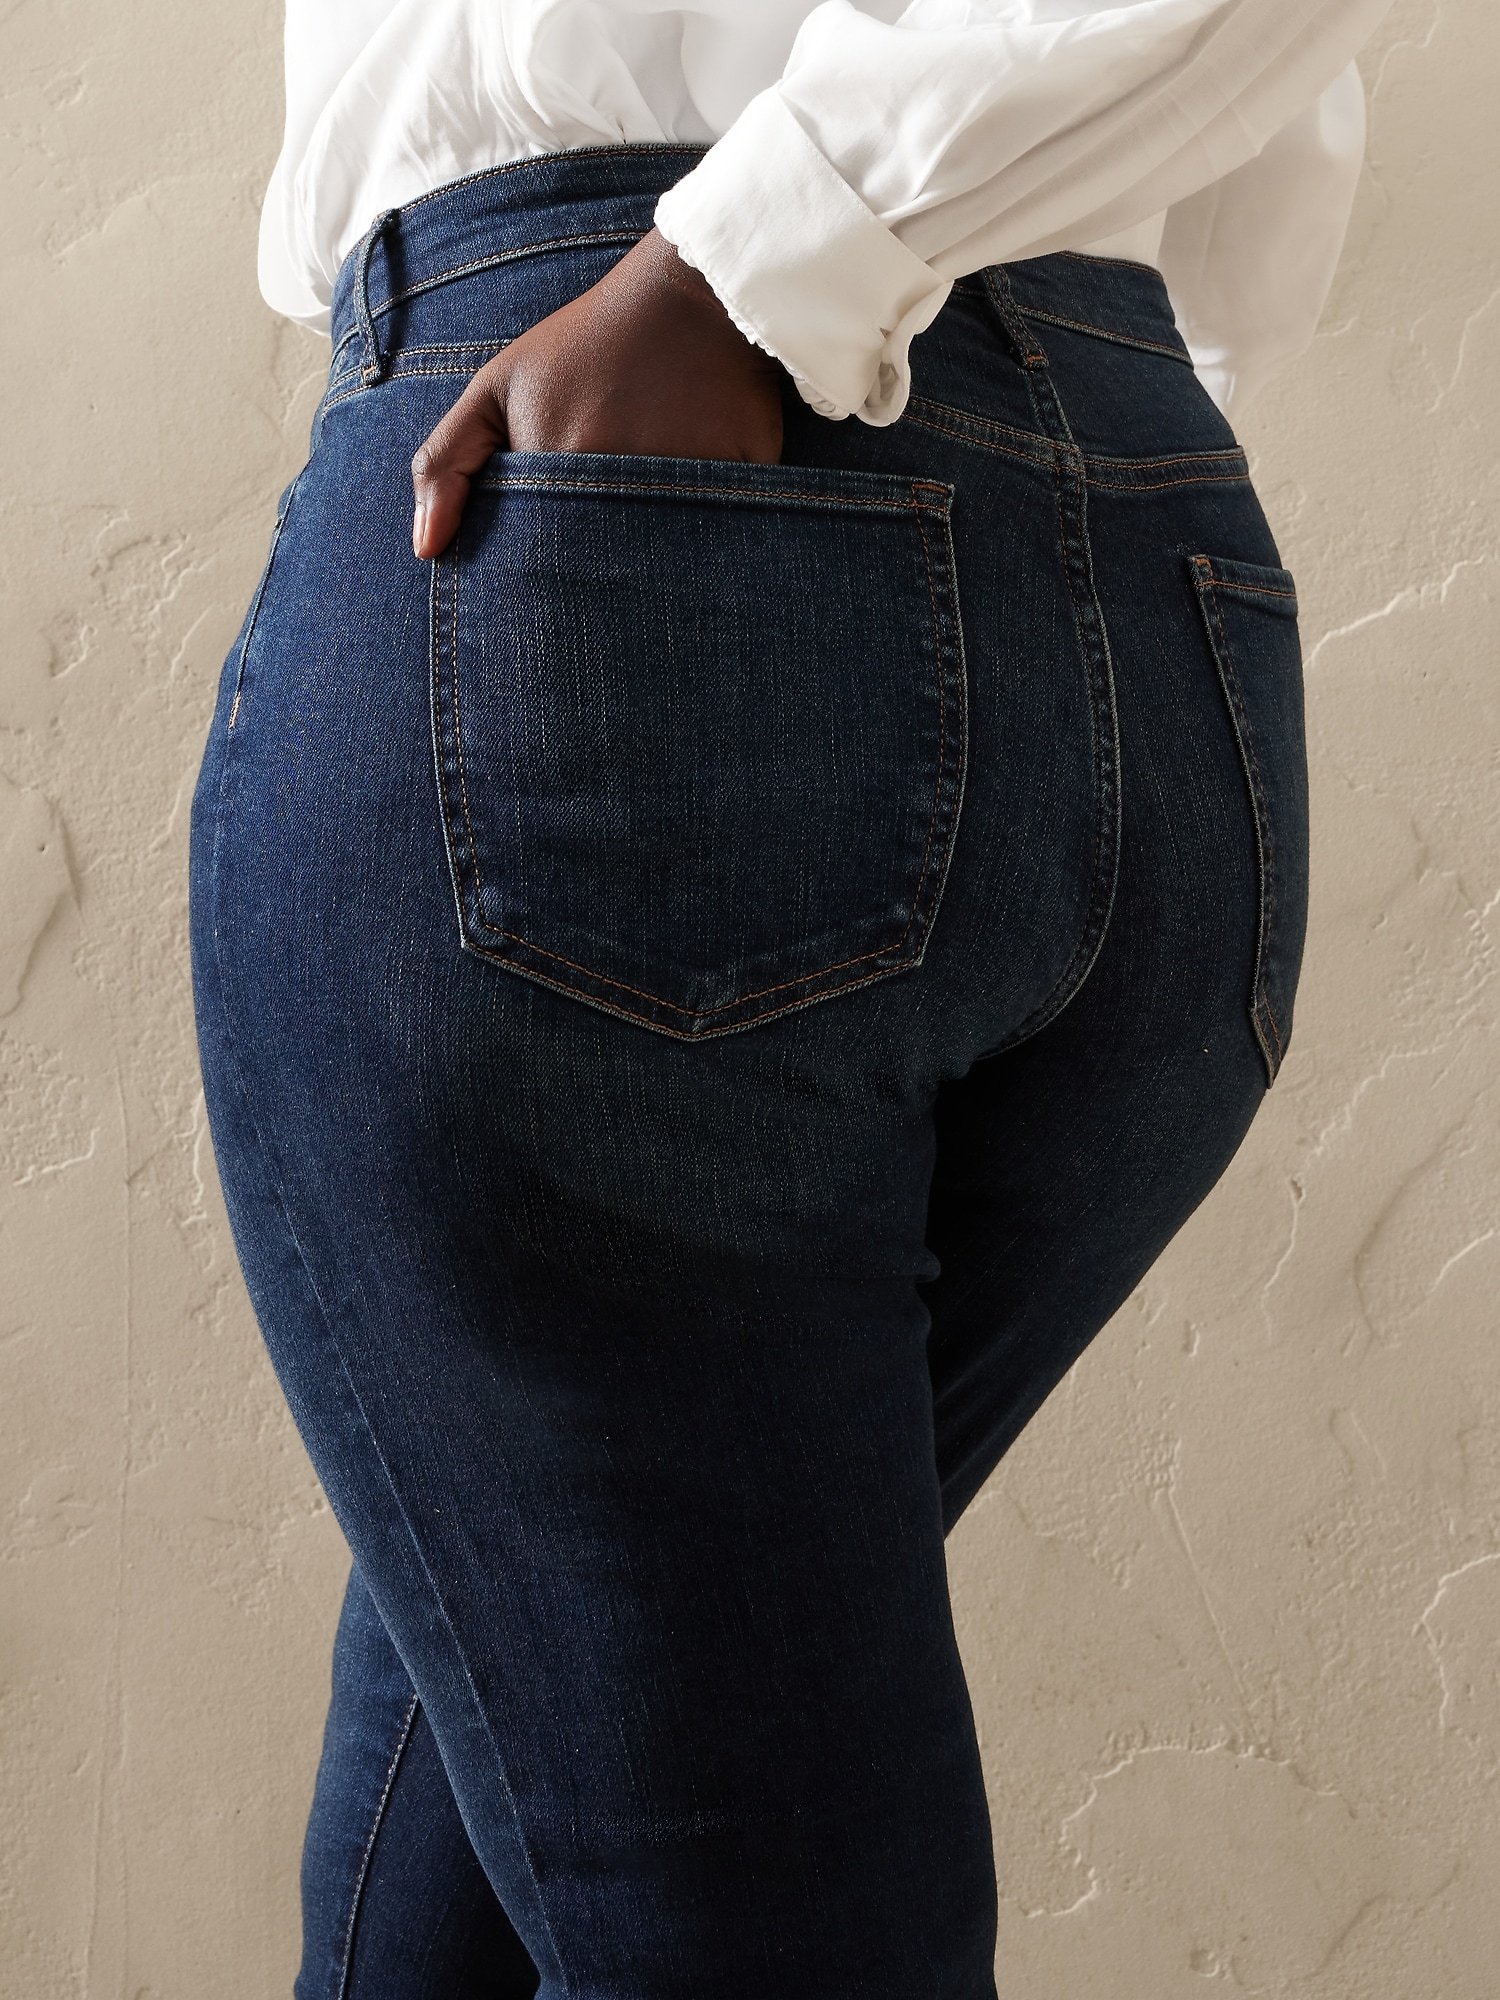 Banana Republic Women's Curvy Mid Rise Skinny Jeans 29 / 8 Tall